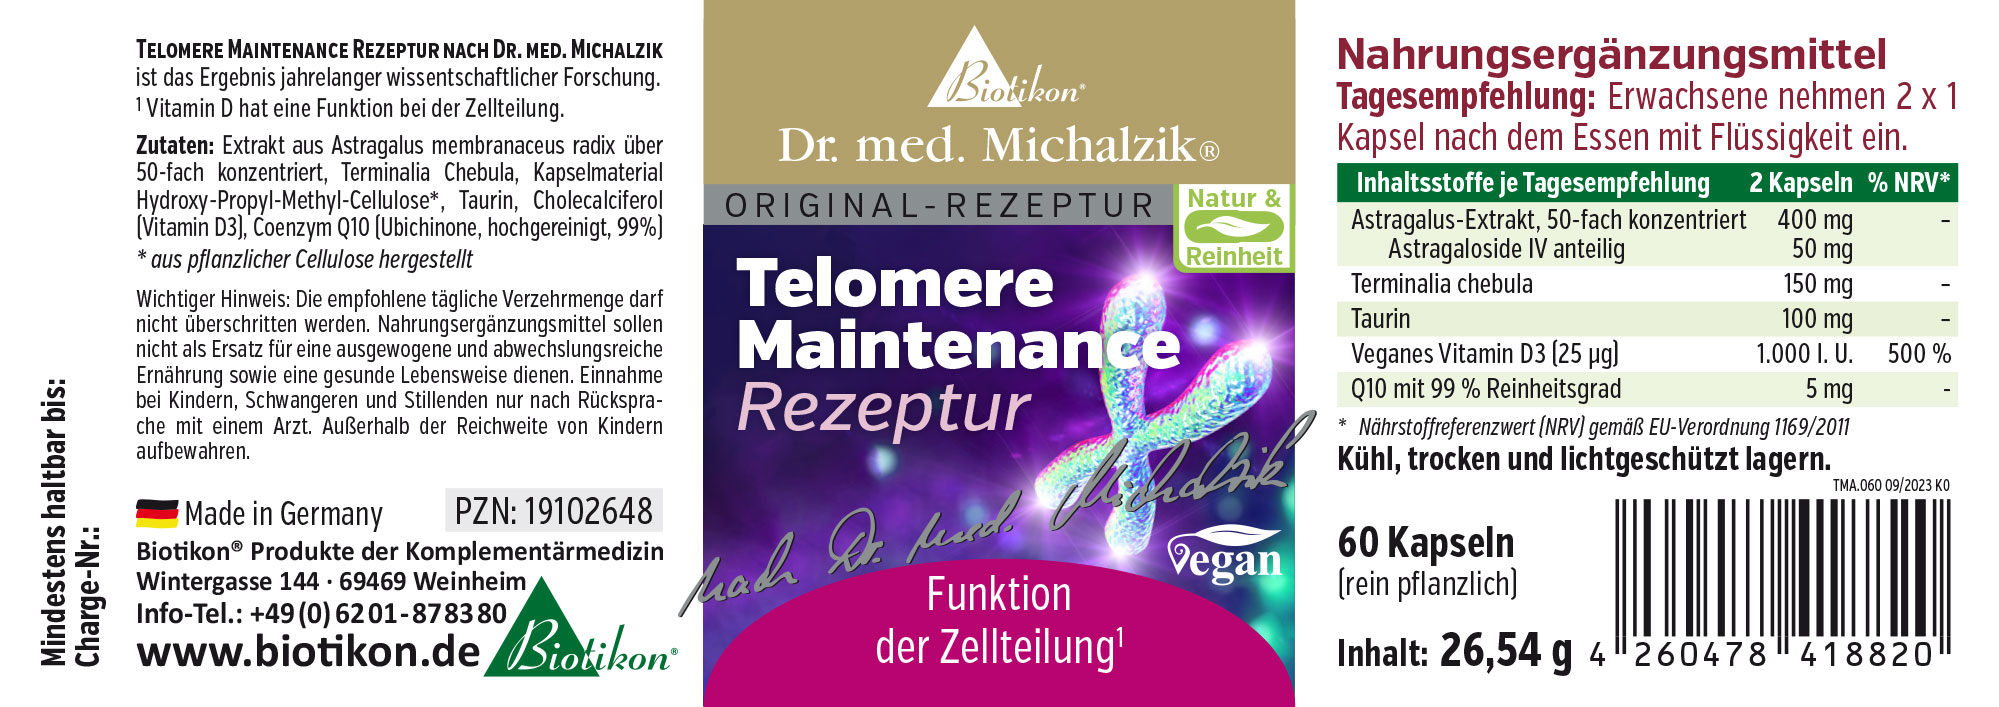 Telomere Maintenance Rezeptur nach Dr. med. Michalzik